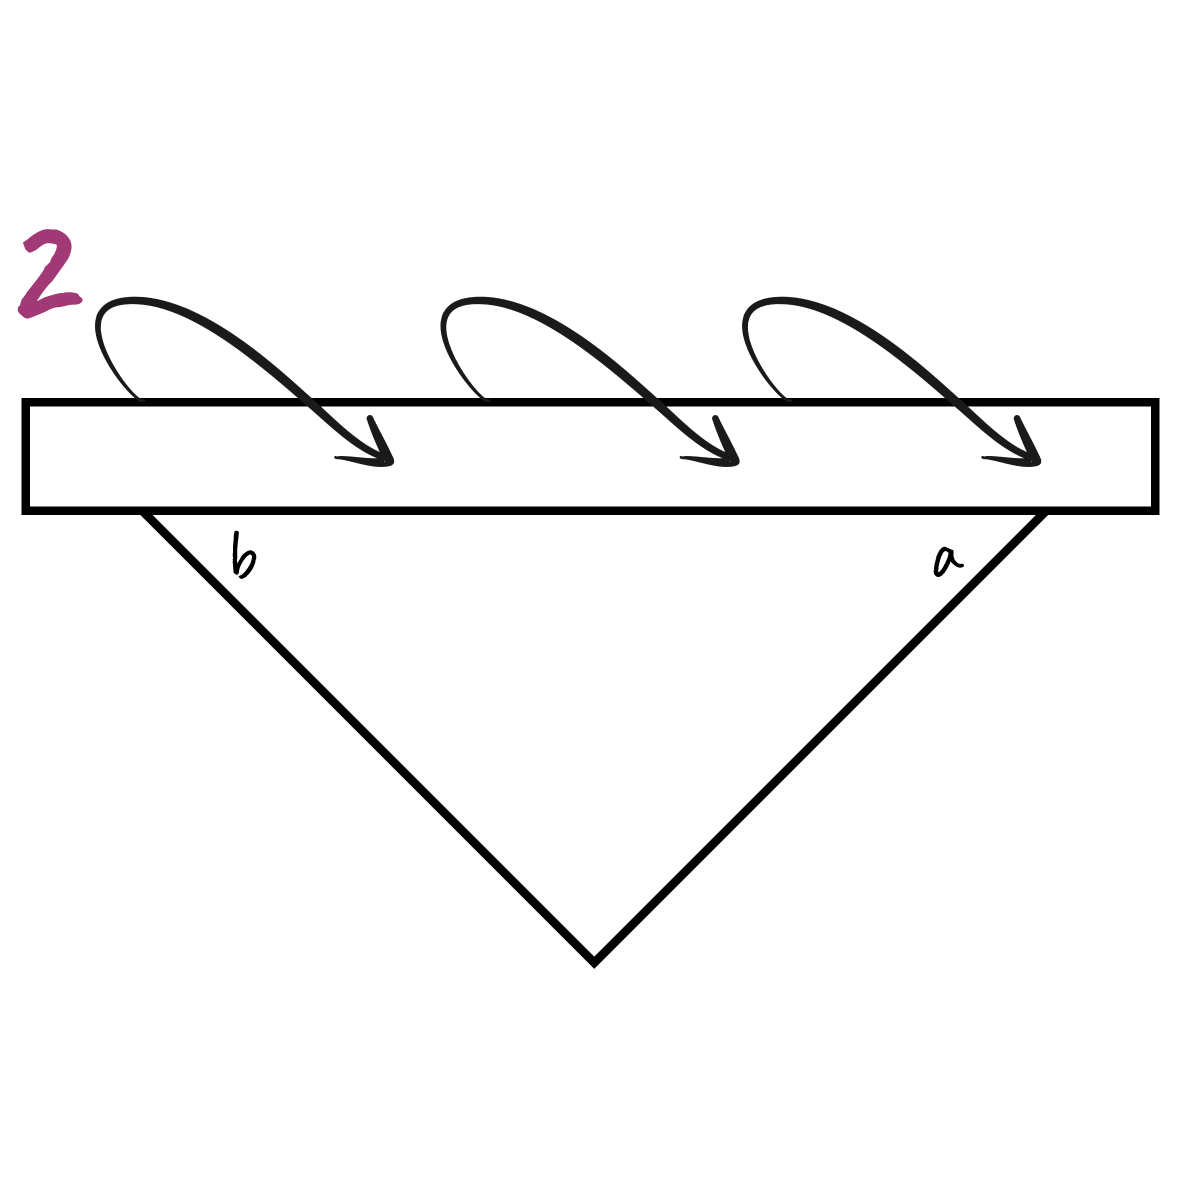  Ro fold step 2